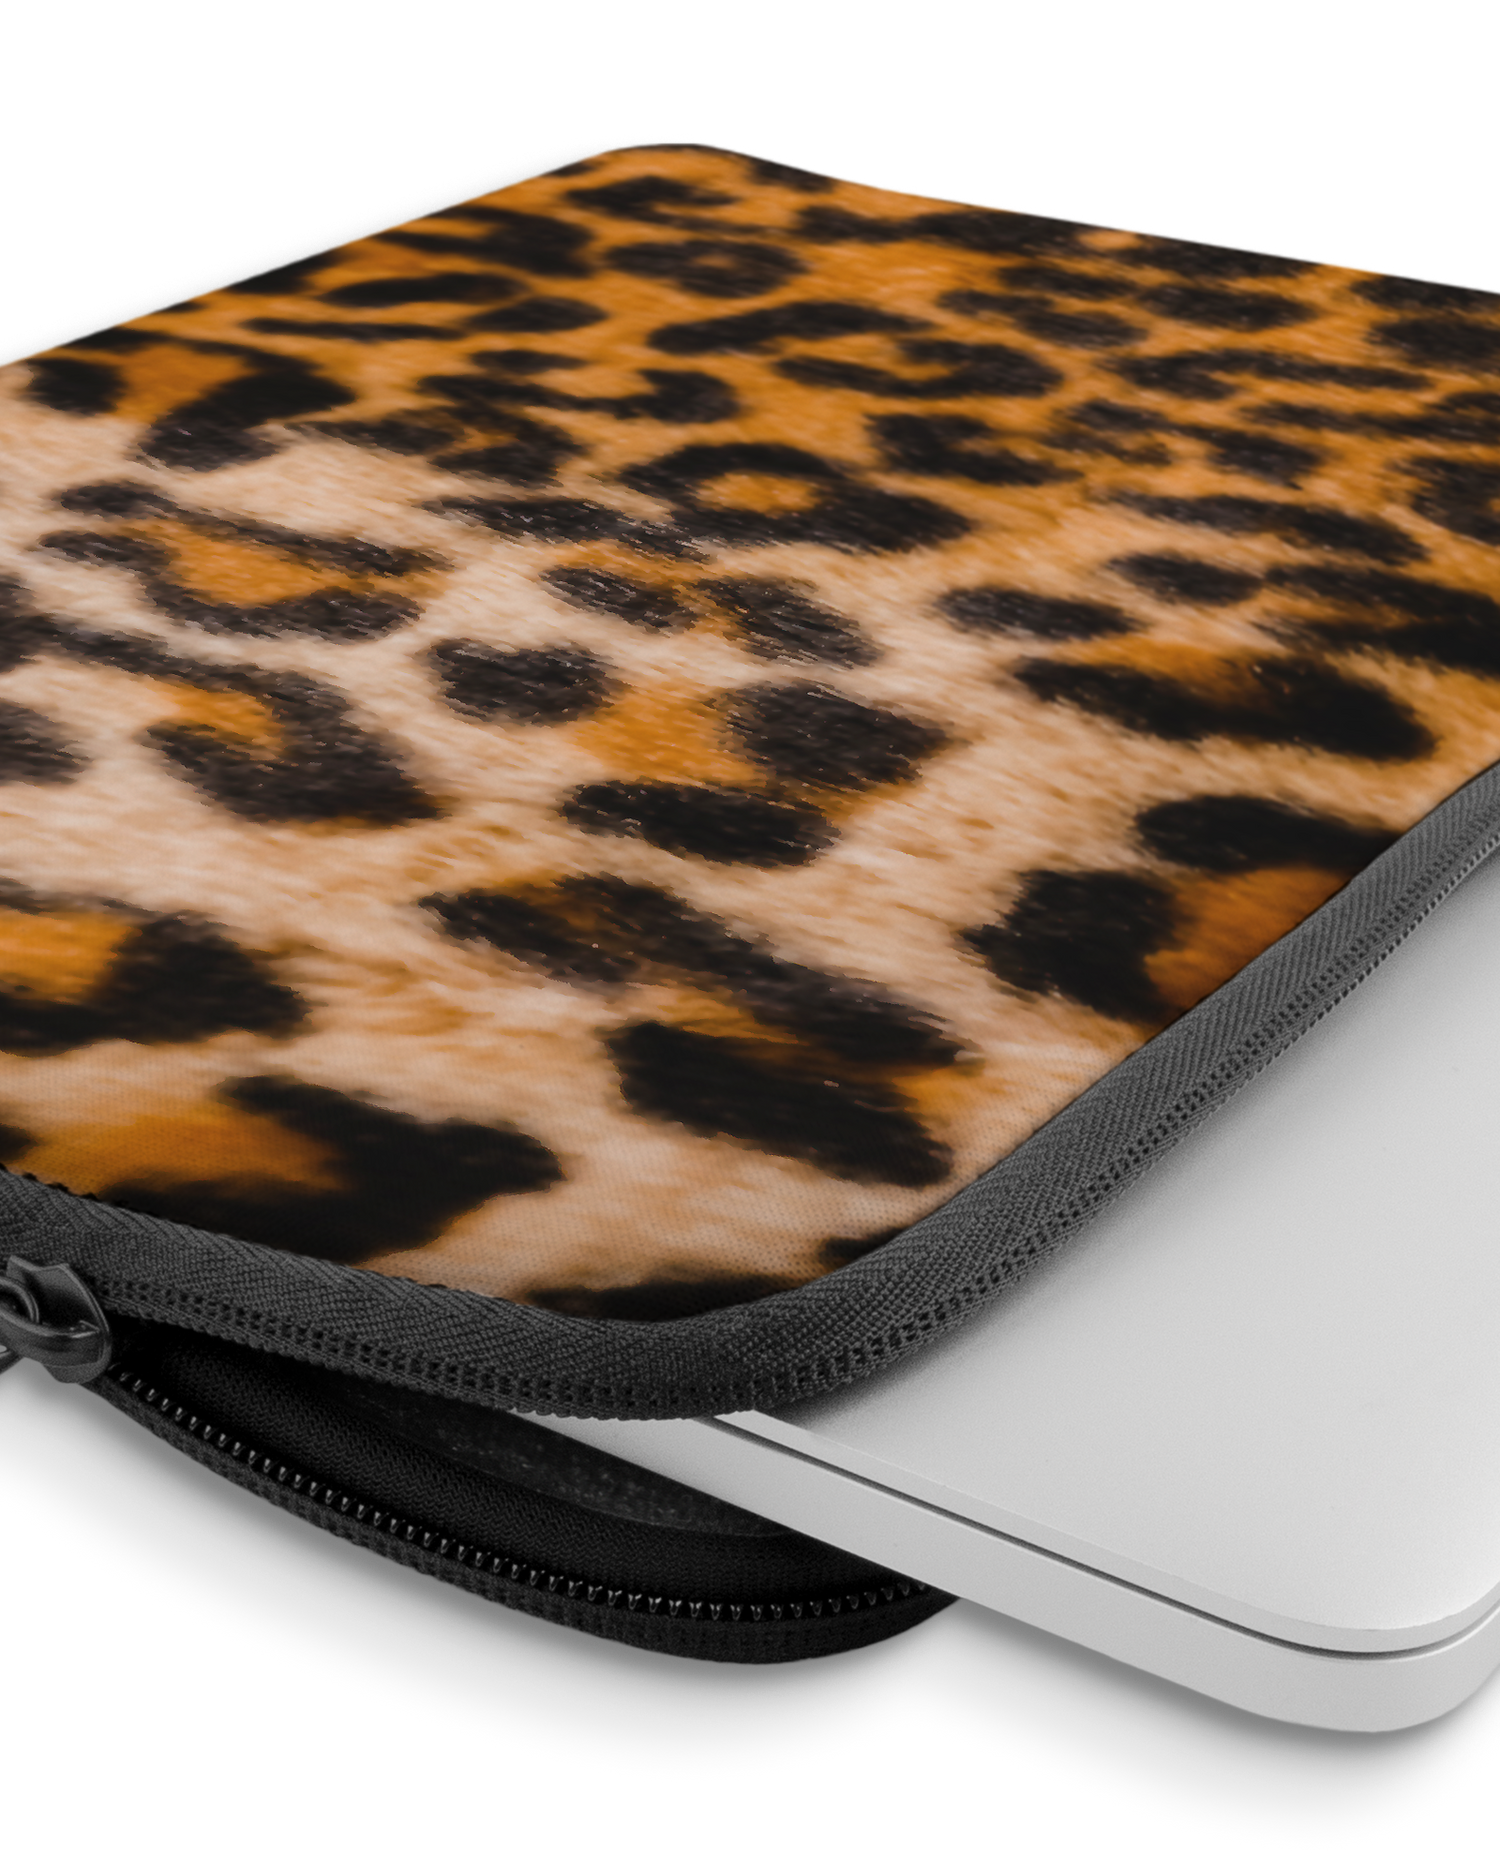 Leopard Pattern Laptop Case 13-14 inch with device inside